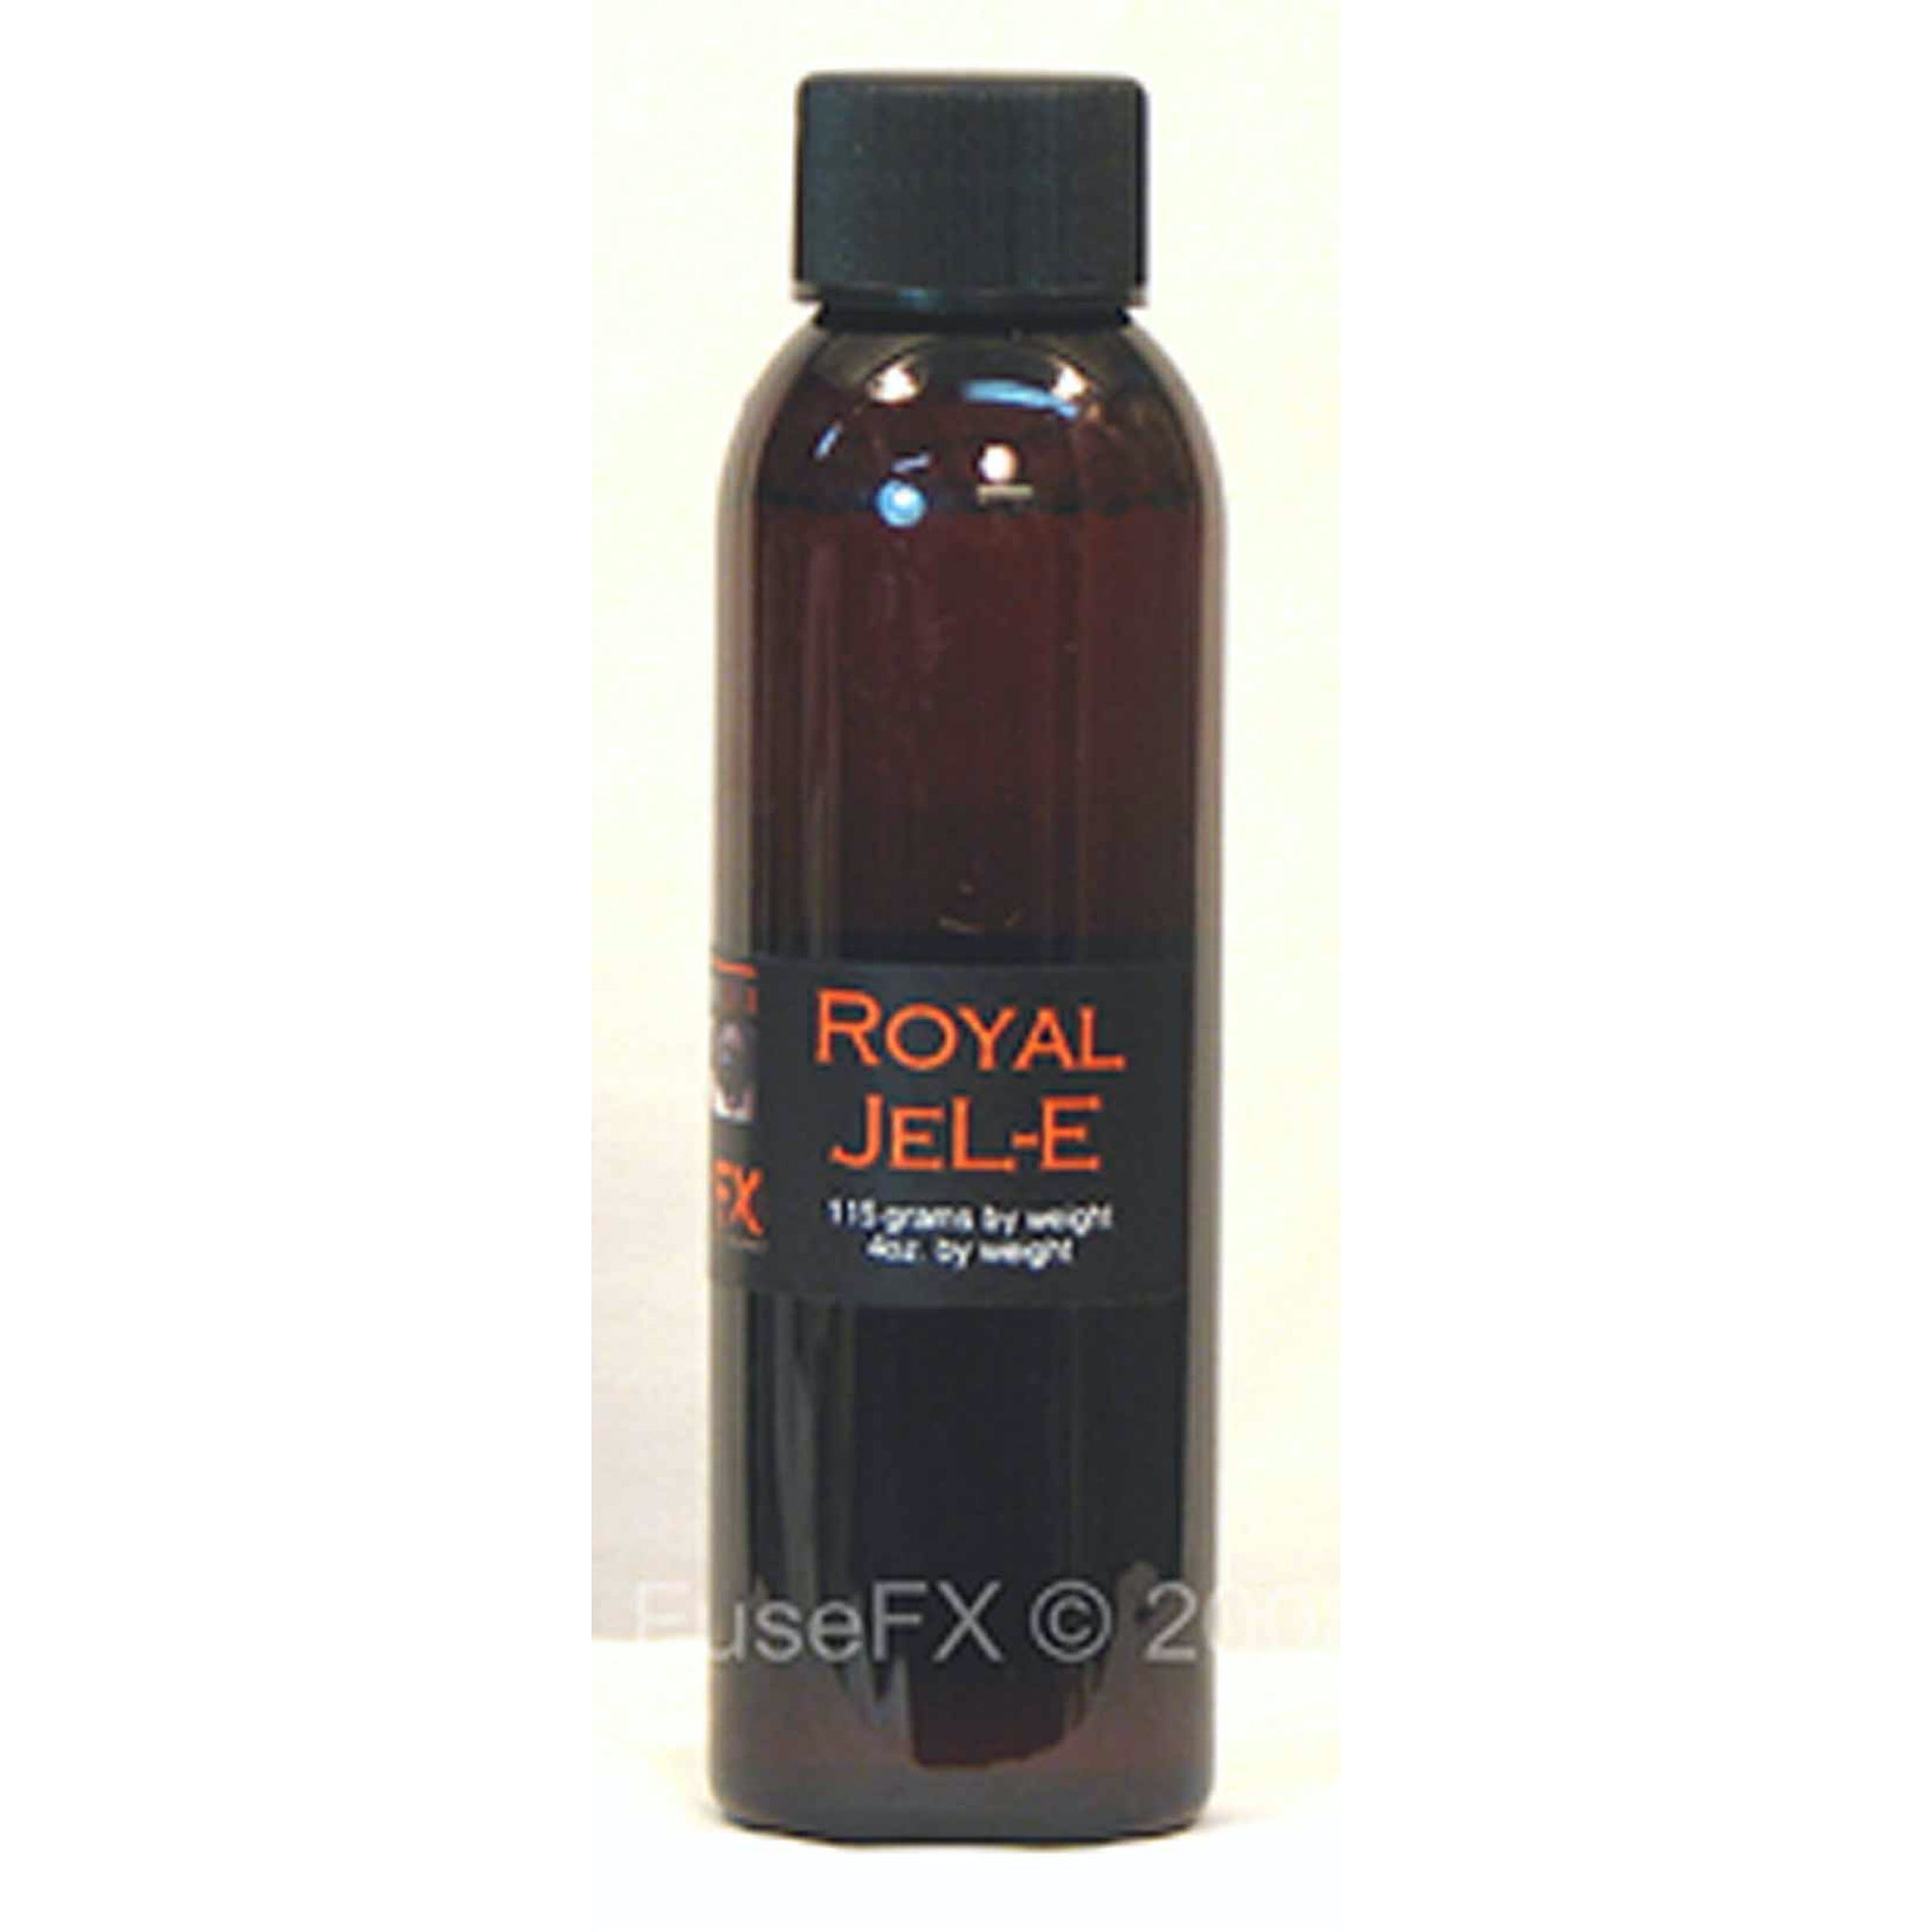 FuseFX Royal JeL-E Release